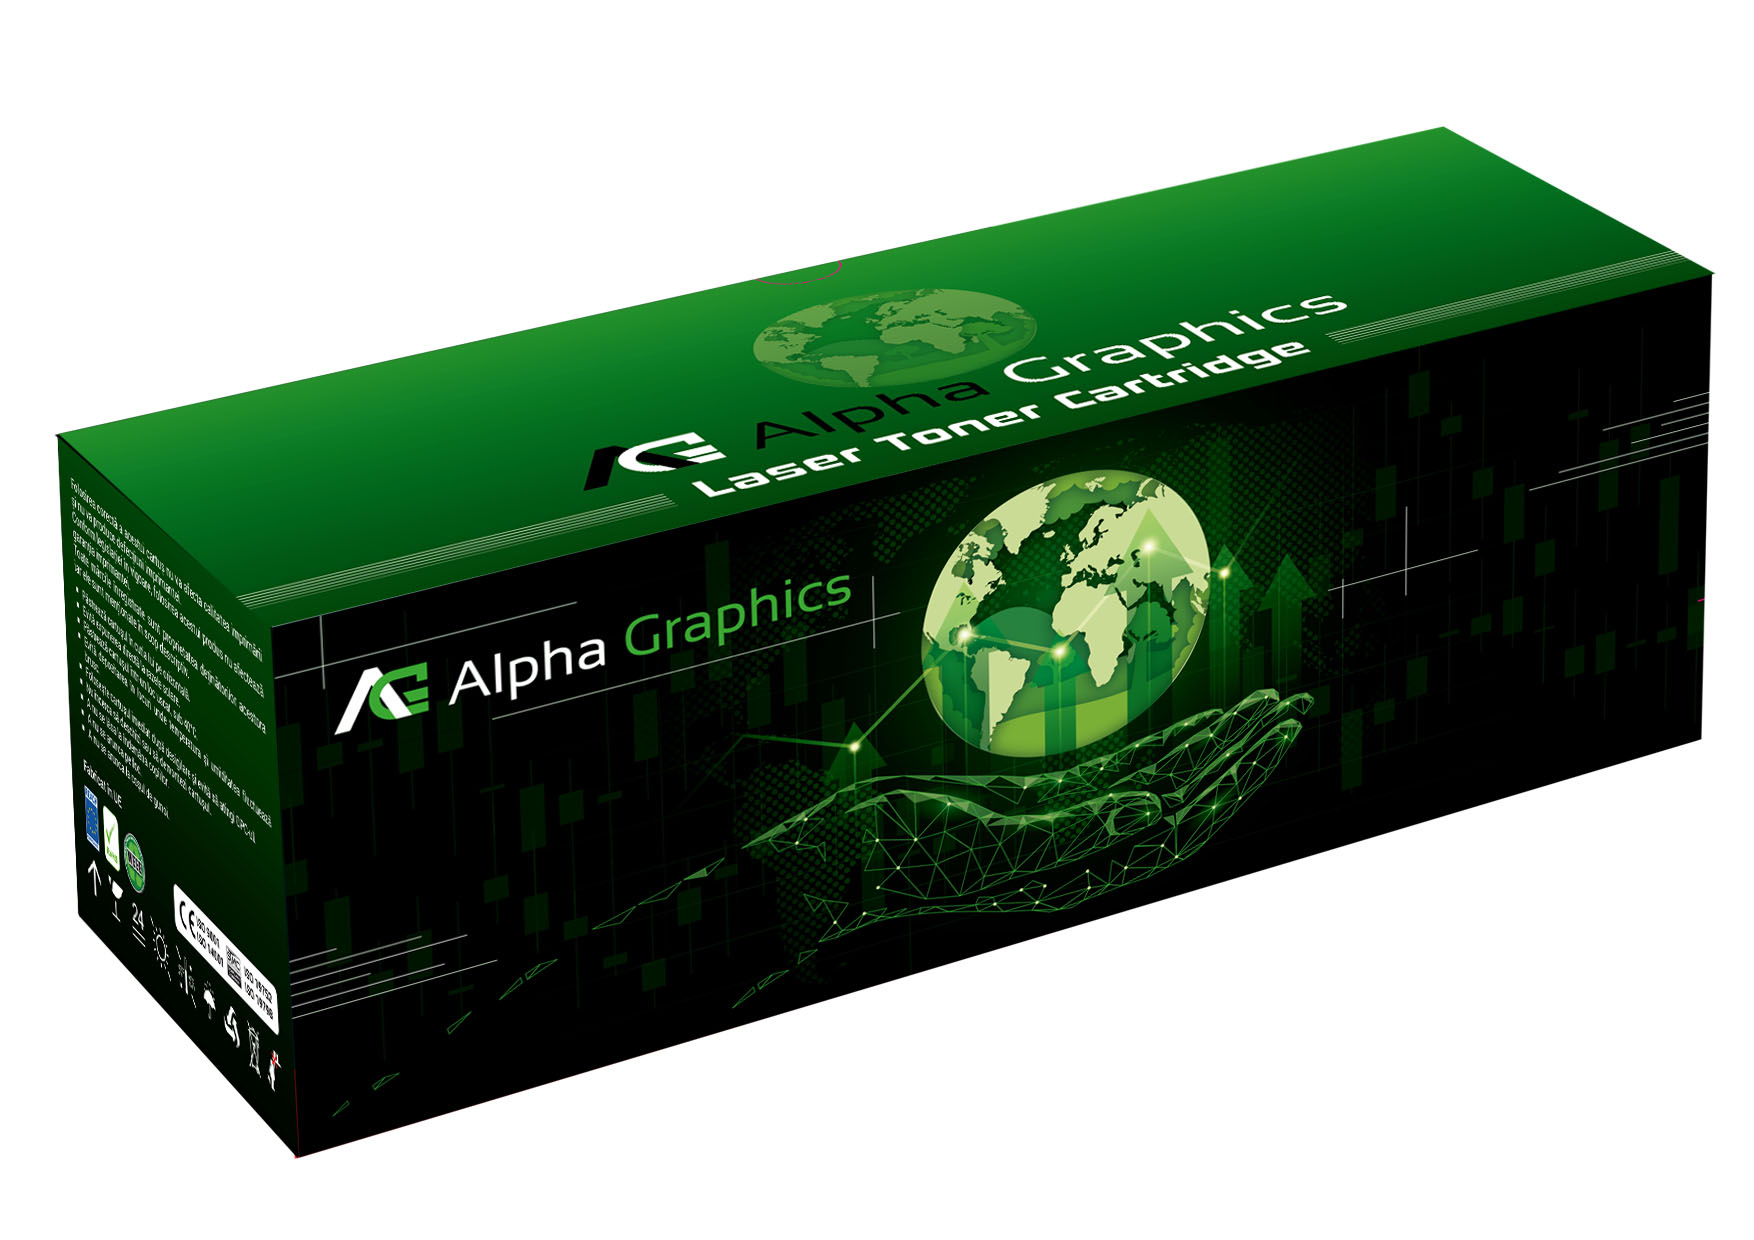 LEX C950/X950 B Alpha Graphics Laser